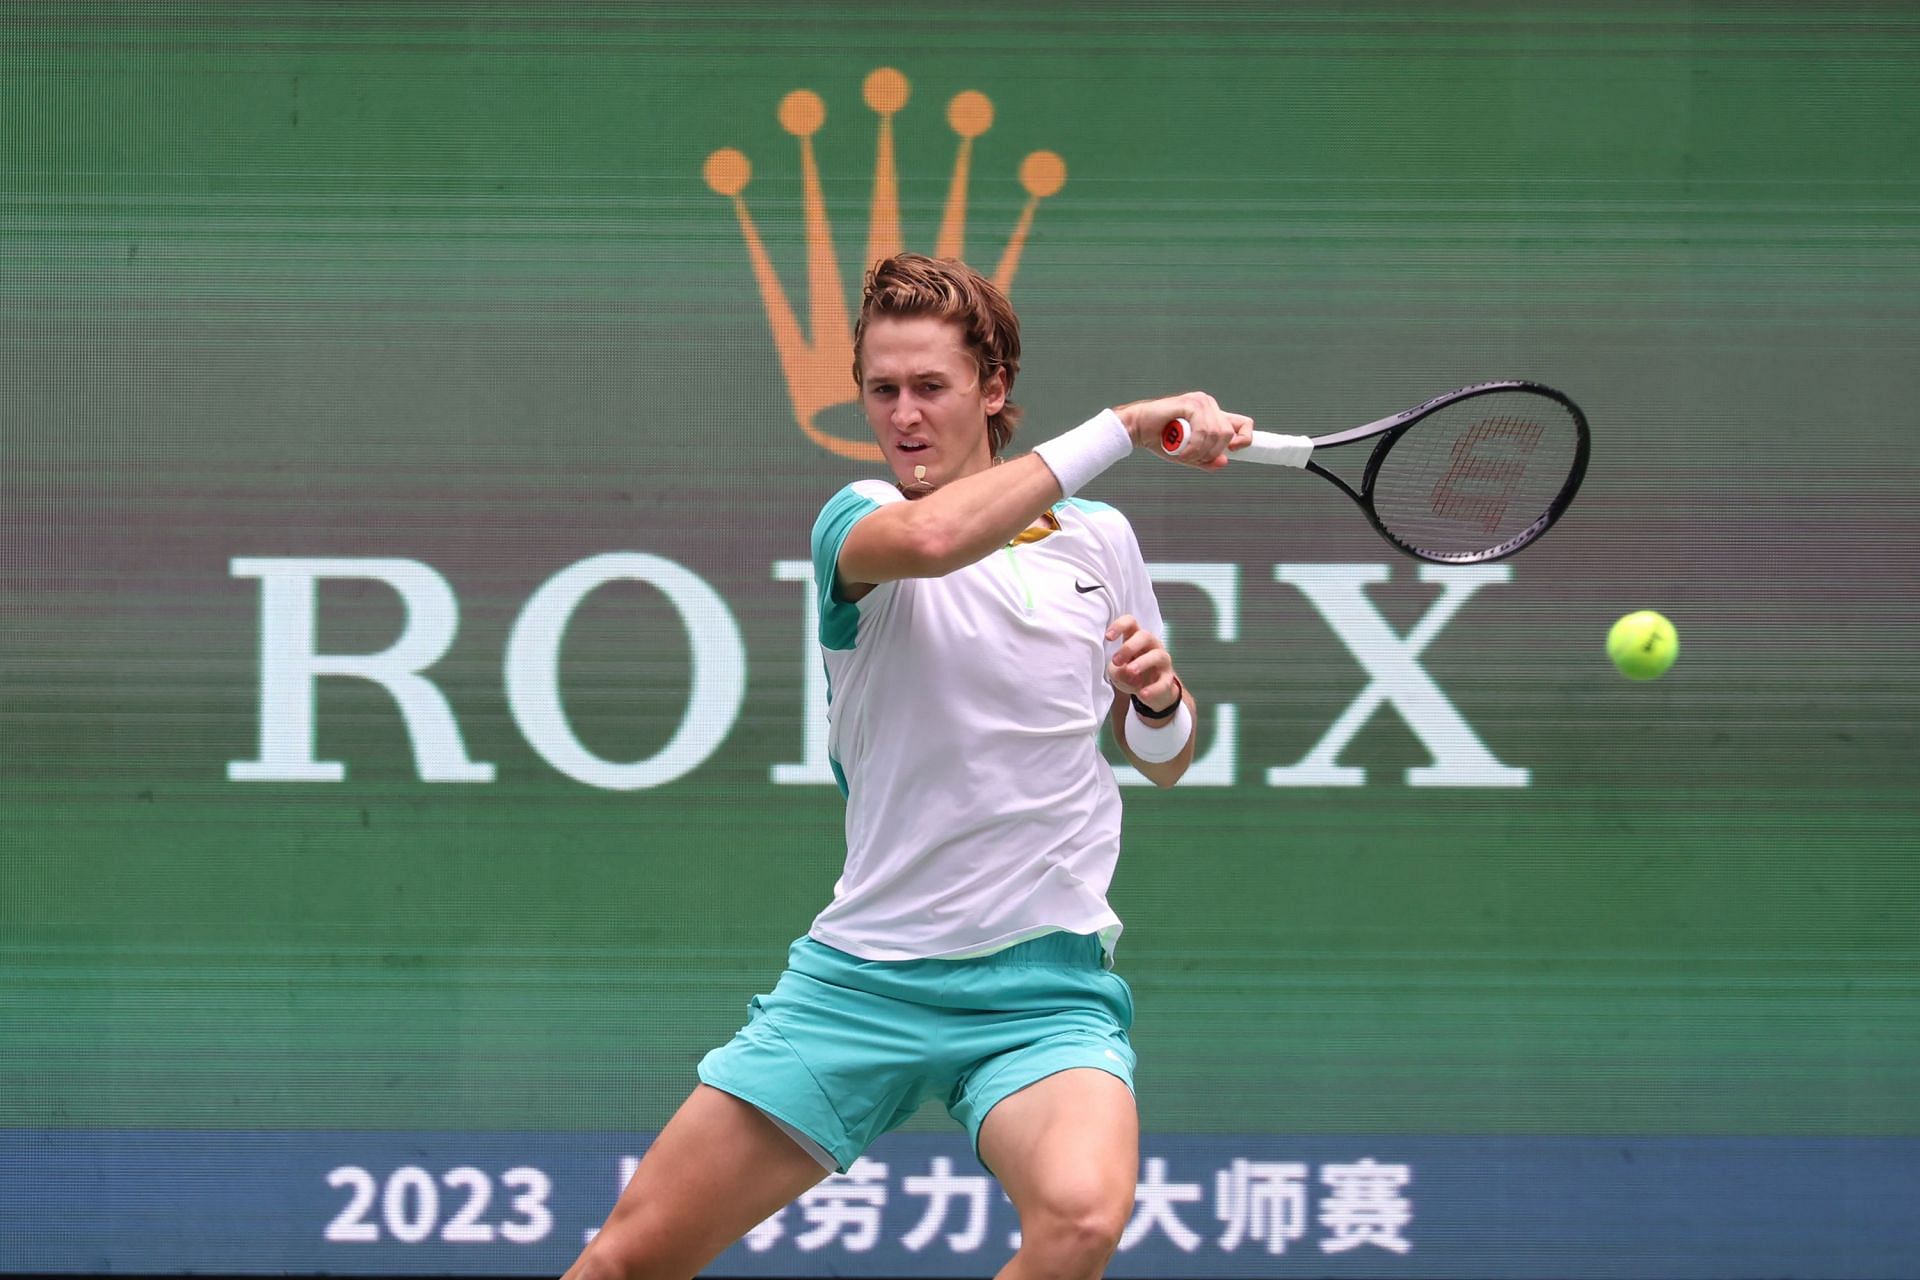 Sebastian Korda scored a second upset win over Francisco Cerundolo at the Shanghai Masters.